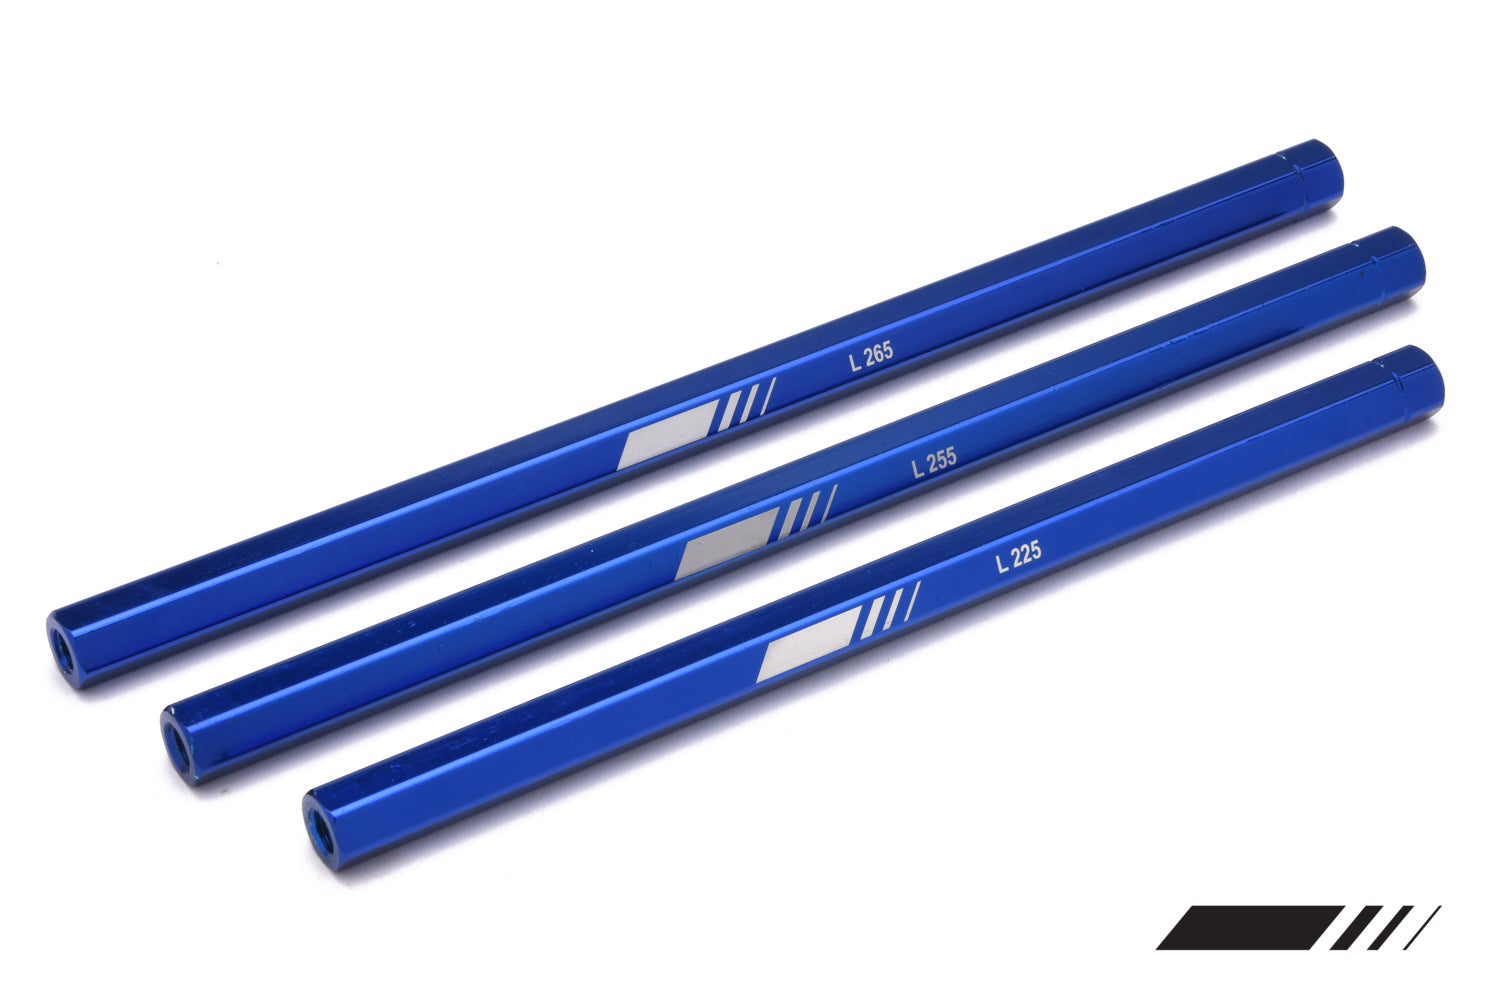 HEXAGON Aluminum Tie Rod 225mm Blue (COMPKART) - (Ranger)